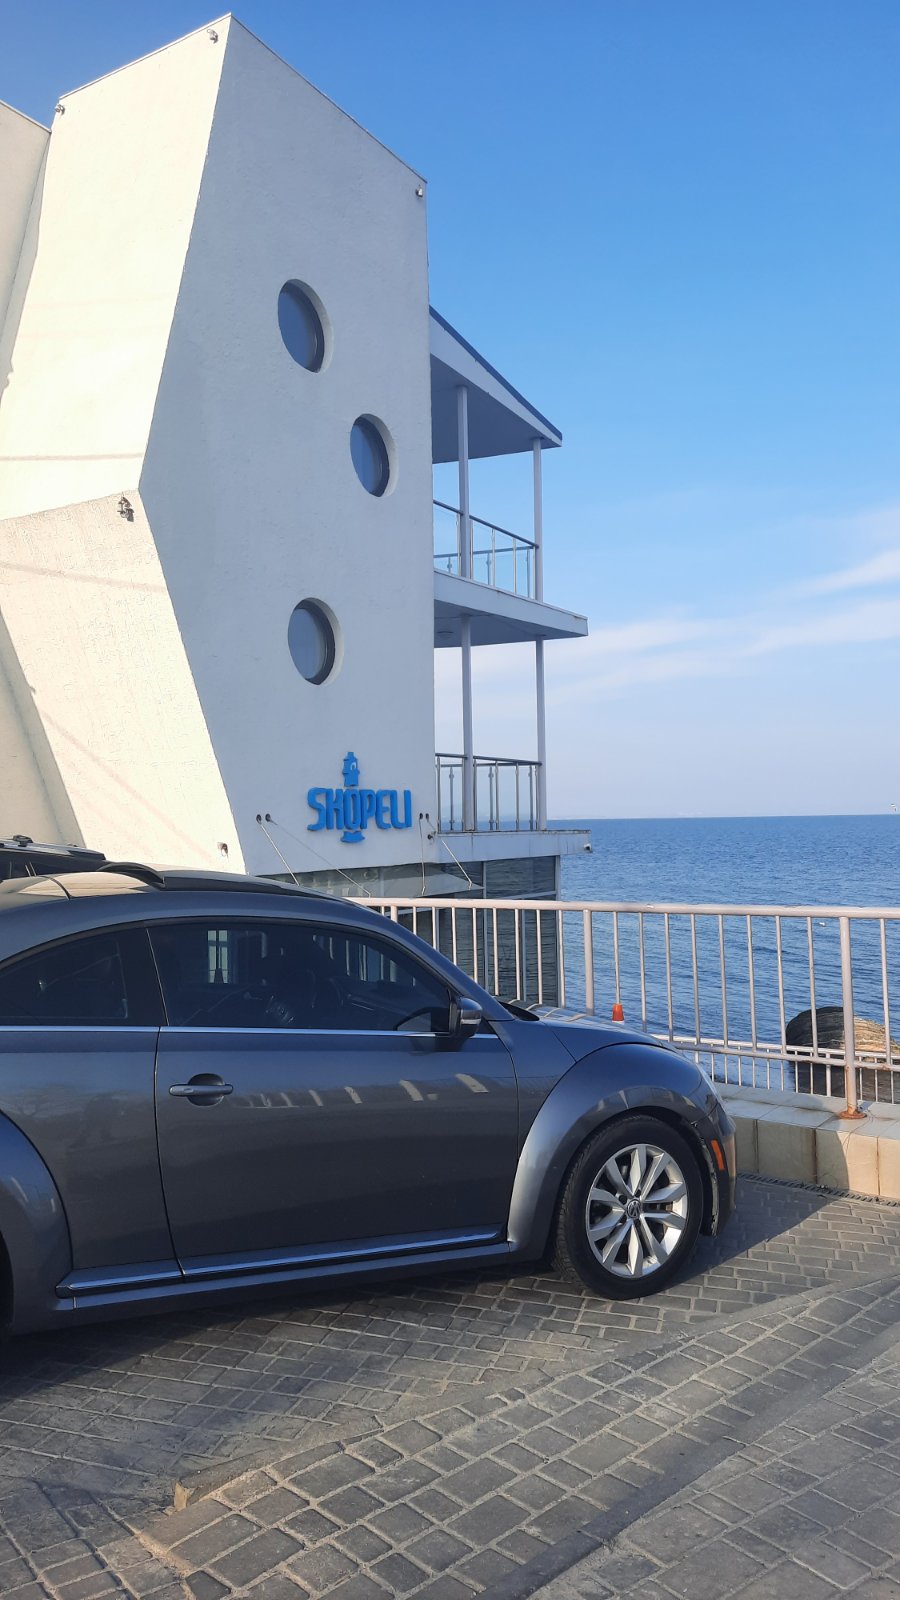 Hotel Skopeli with parking in Odessa